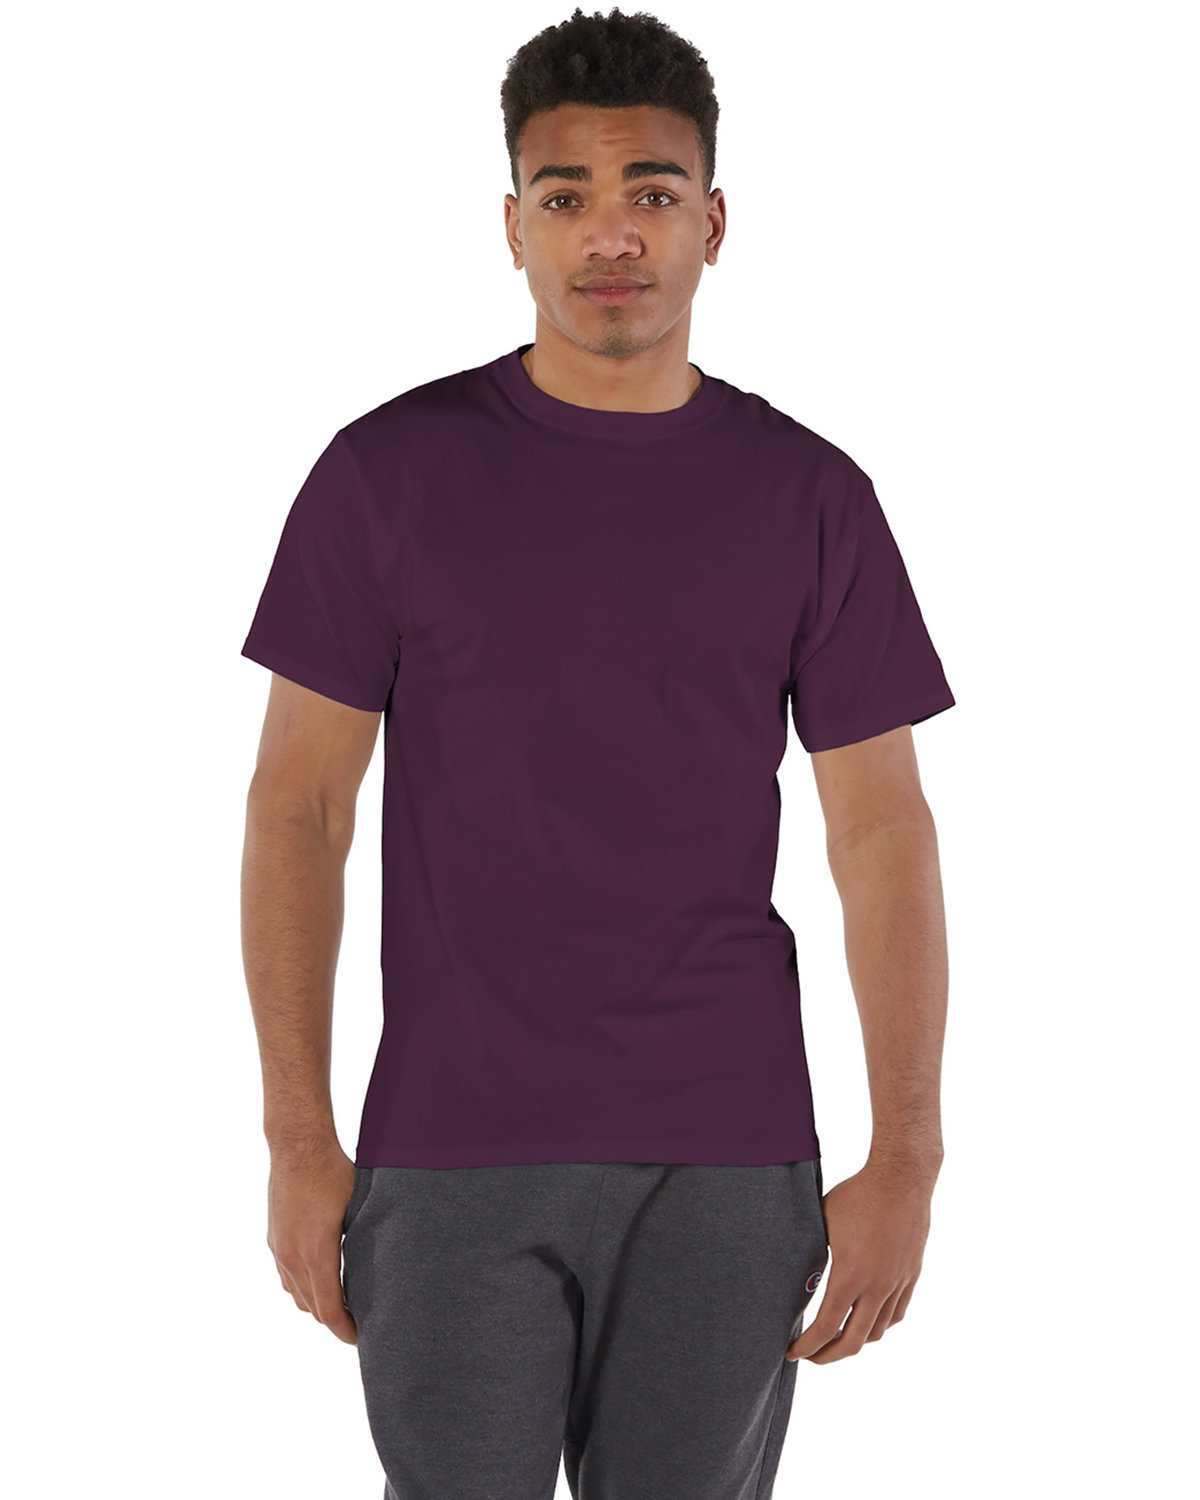 Champion Adult 6 oz. Short-Sleeve T-Shirt maroon 